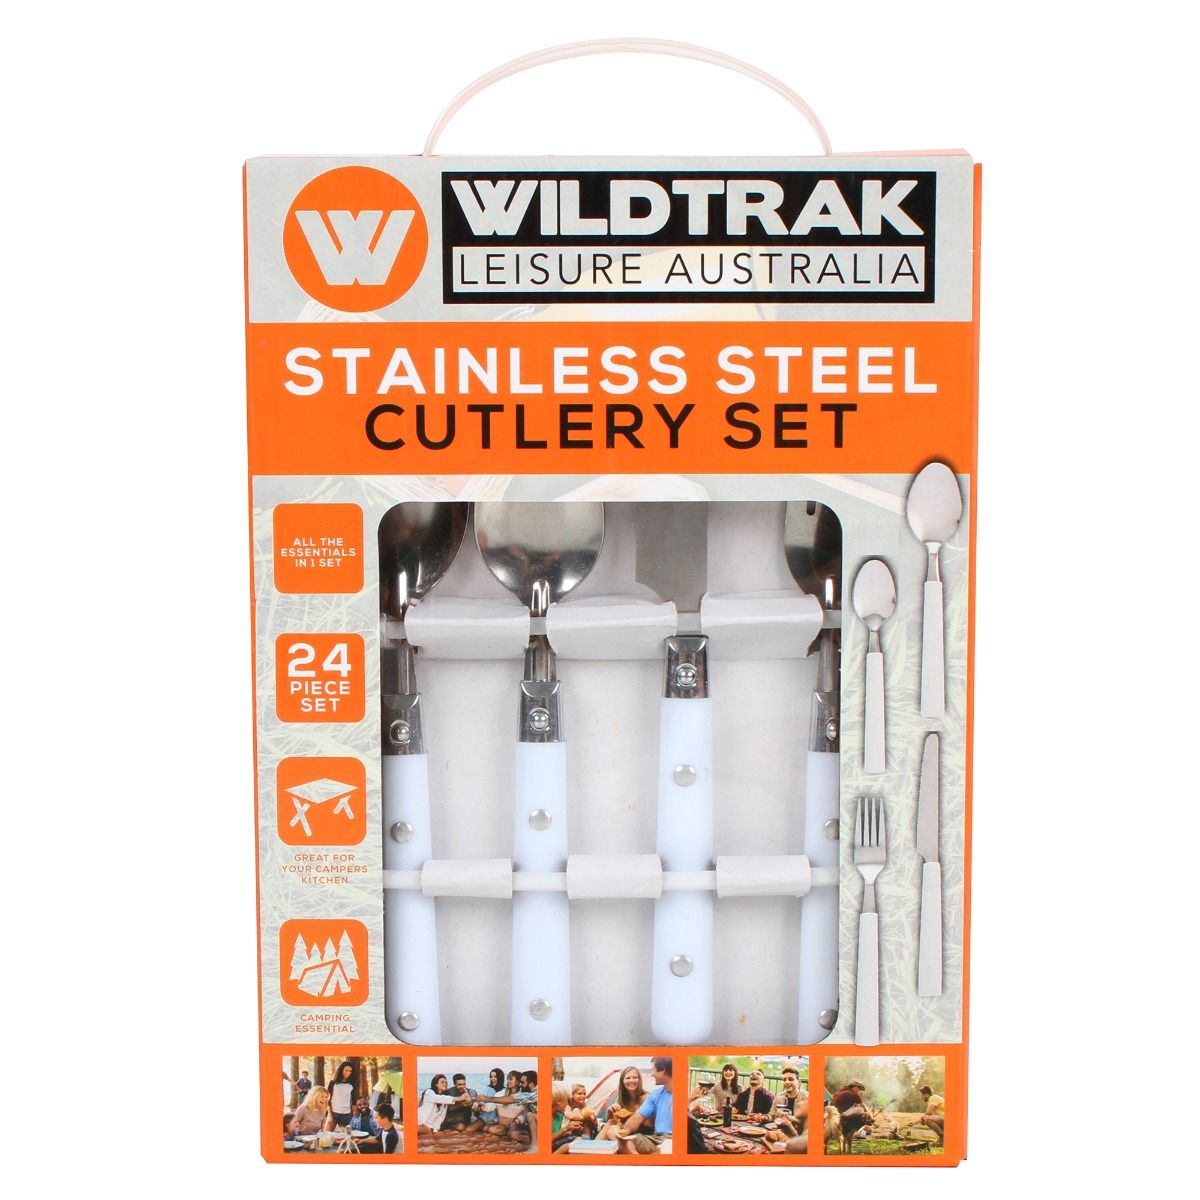 Wildtrak Stainless Steel Cutlery Set - 24 Piece